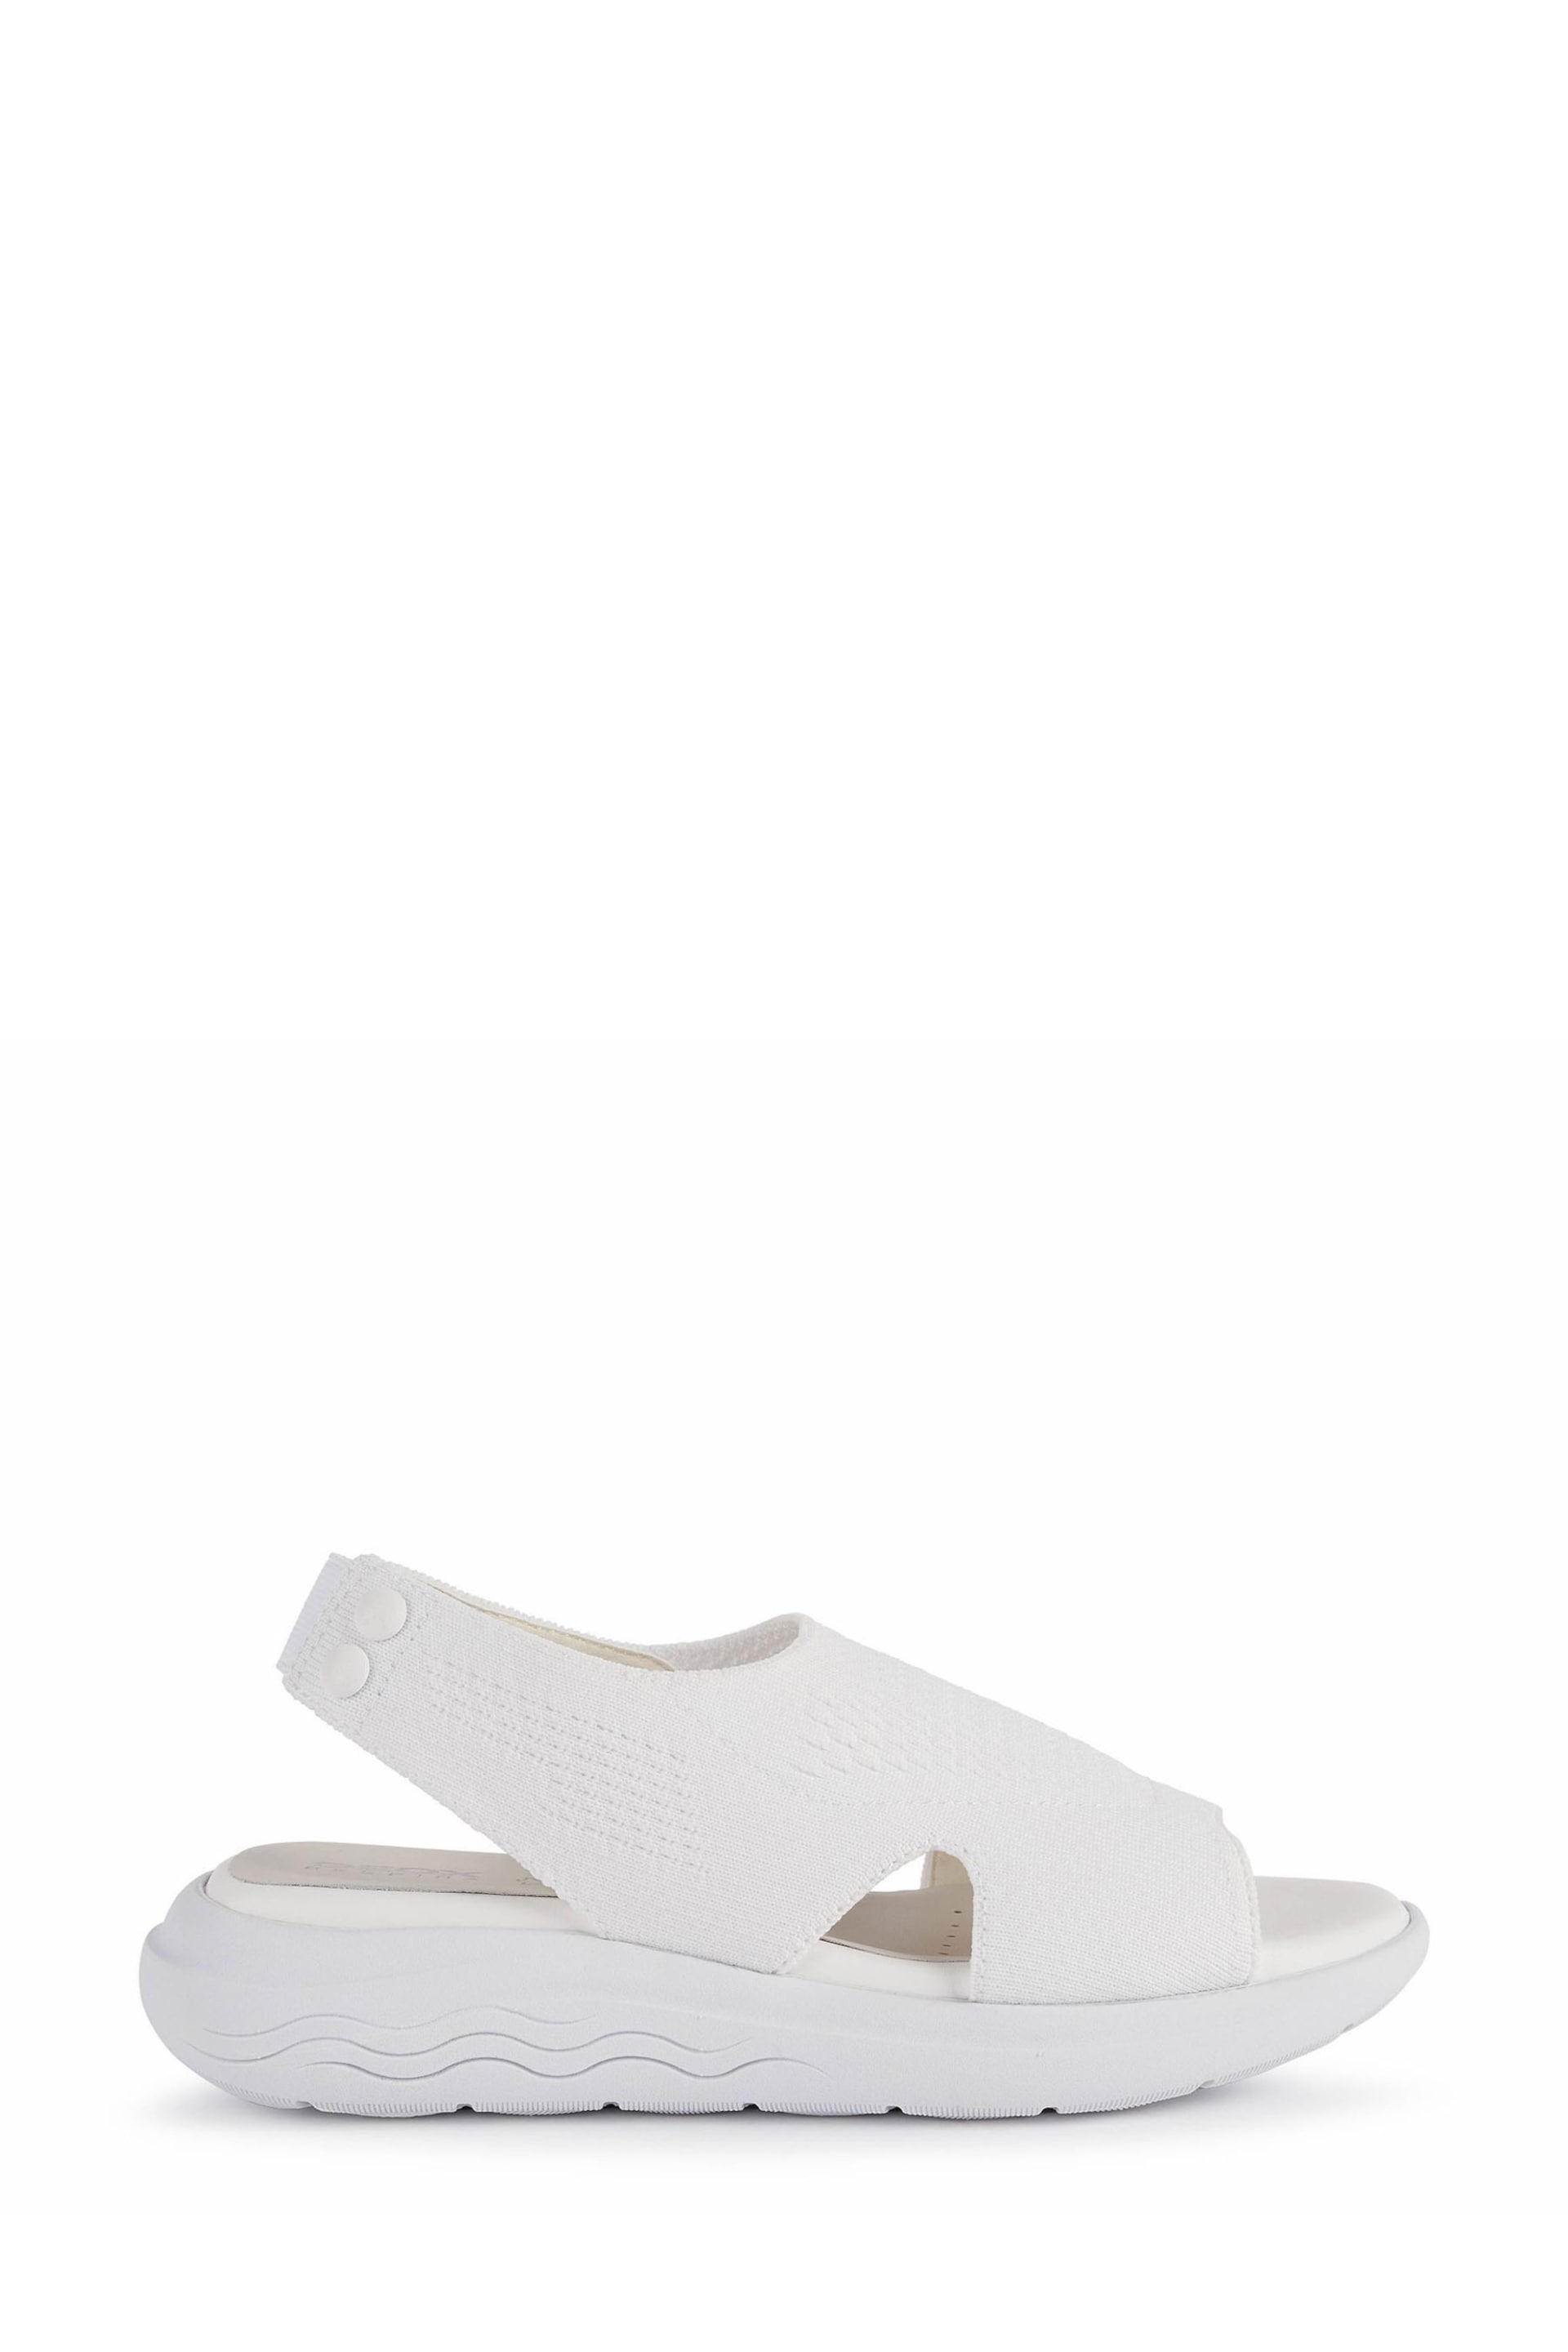 Geox Womens Spherica White Ec5 Sandals - Image 1 of 2